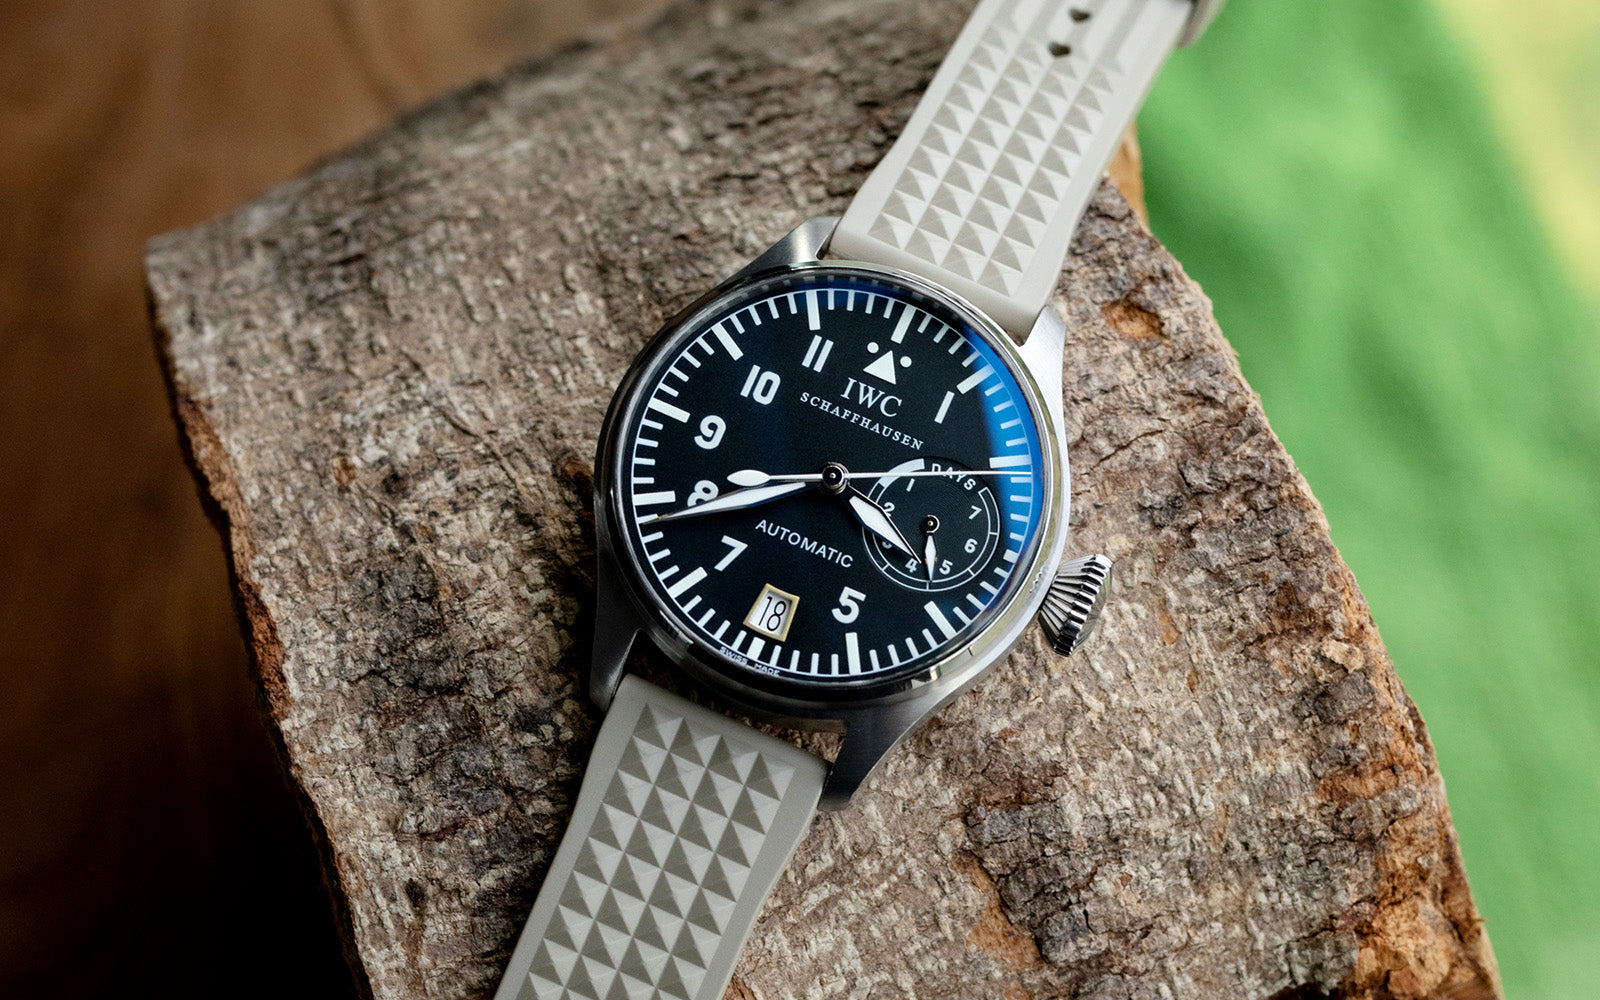 Standard Rubber Watch Band